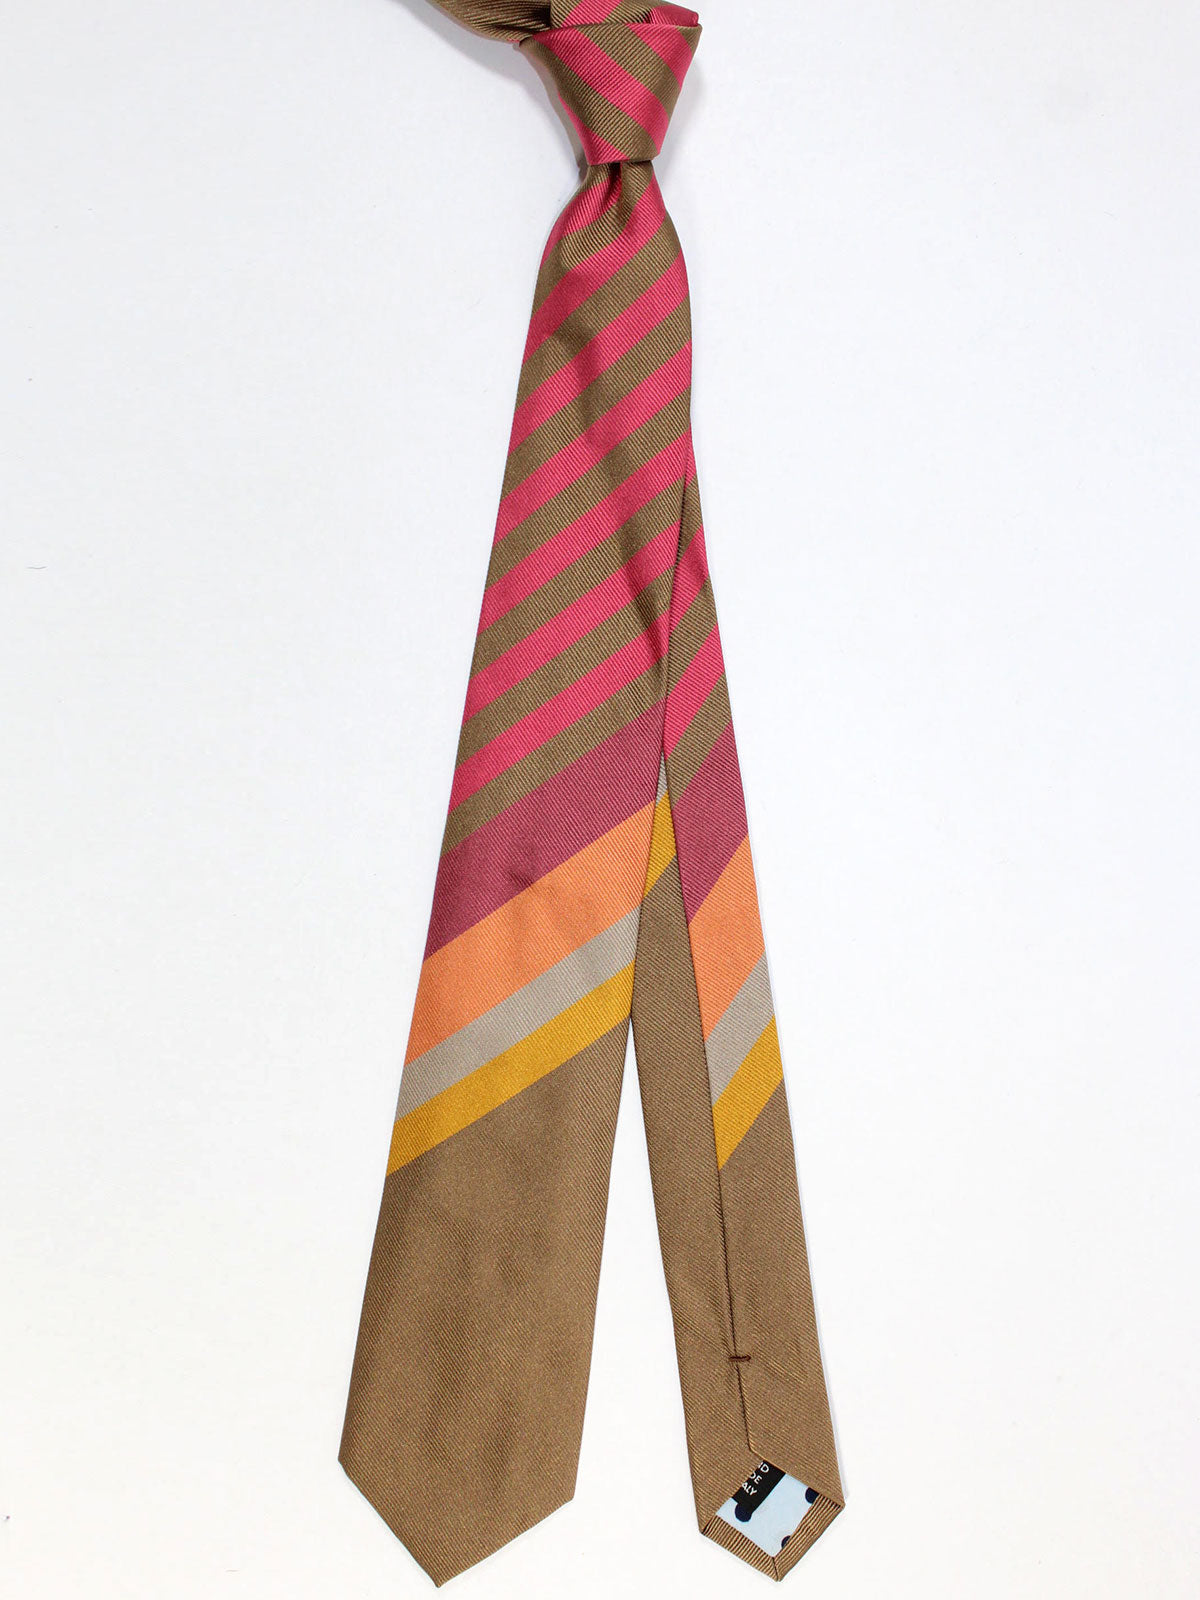 Gene Meyer Necktie Taupe Pink Stripes Design - Hand Made In Italy